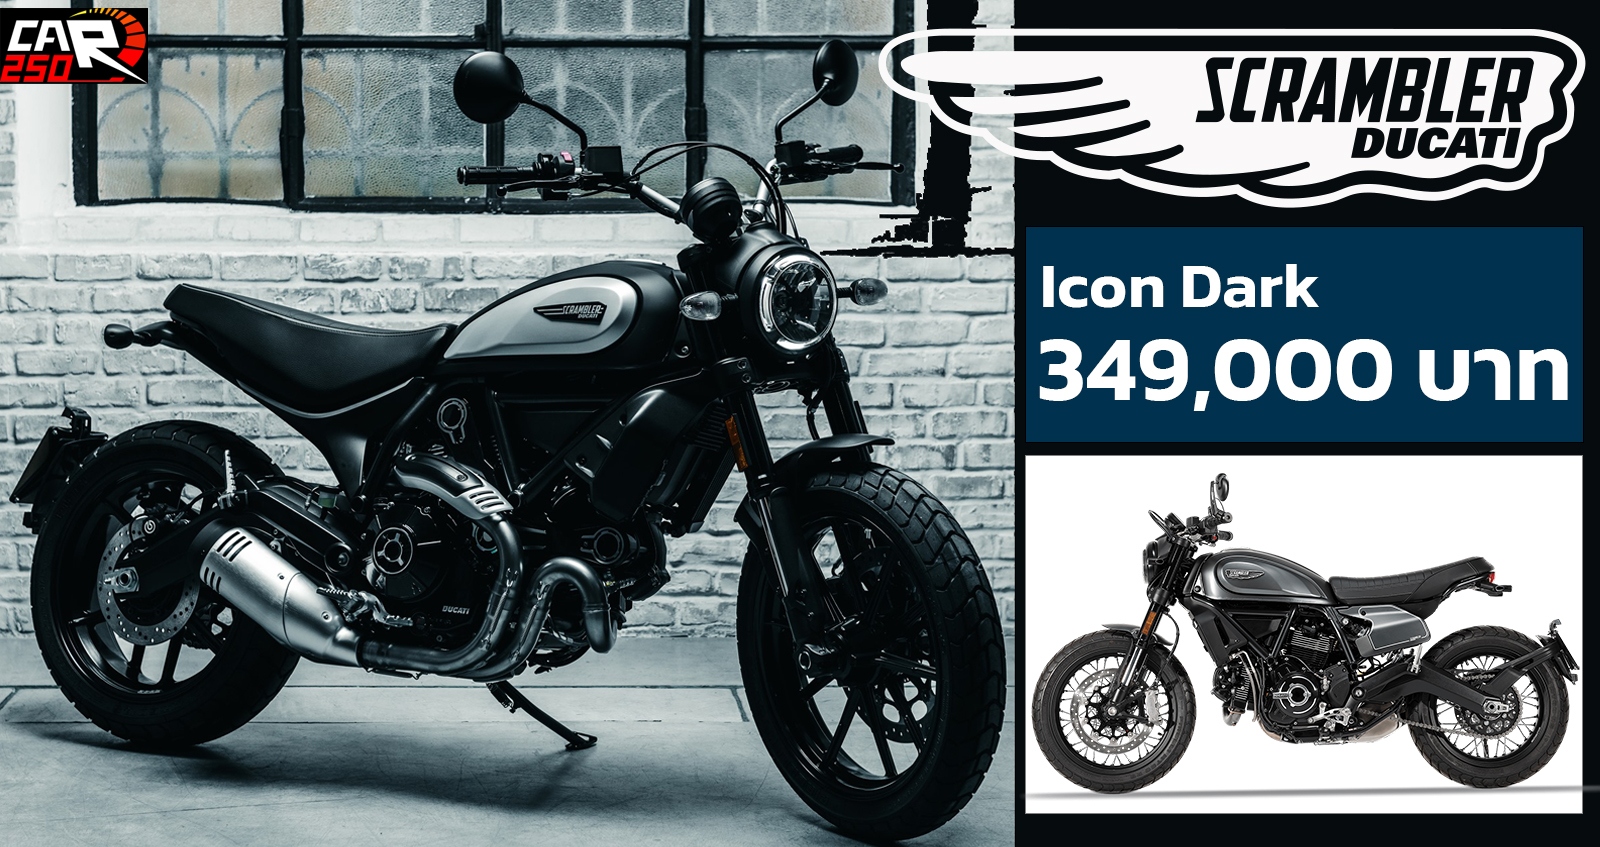 Ducati Scrambler Icon Dark เปิดขายไทย 349,000 บาท